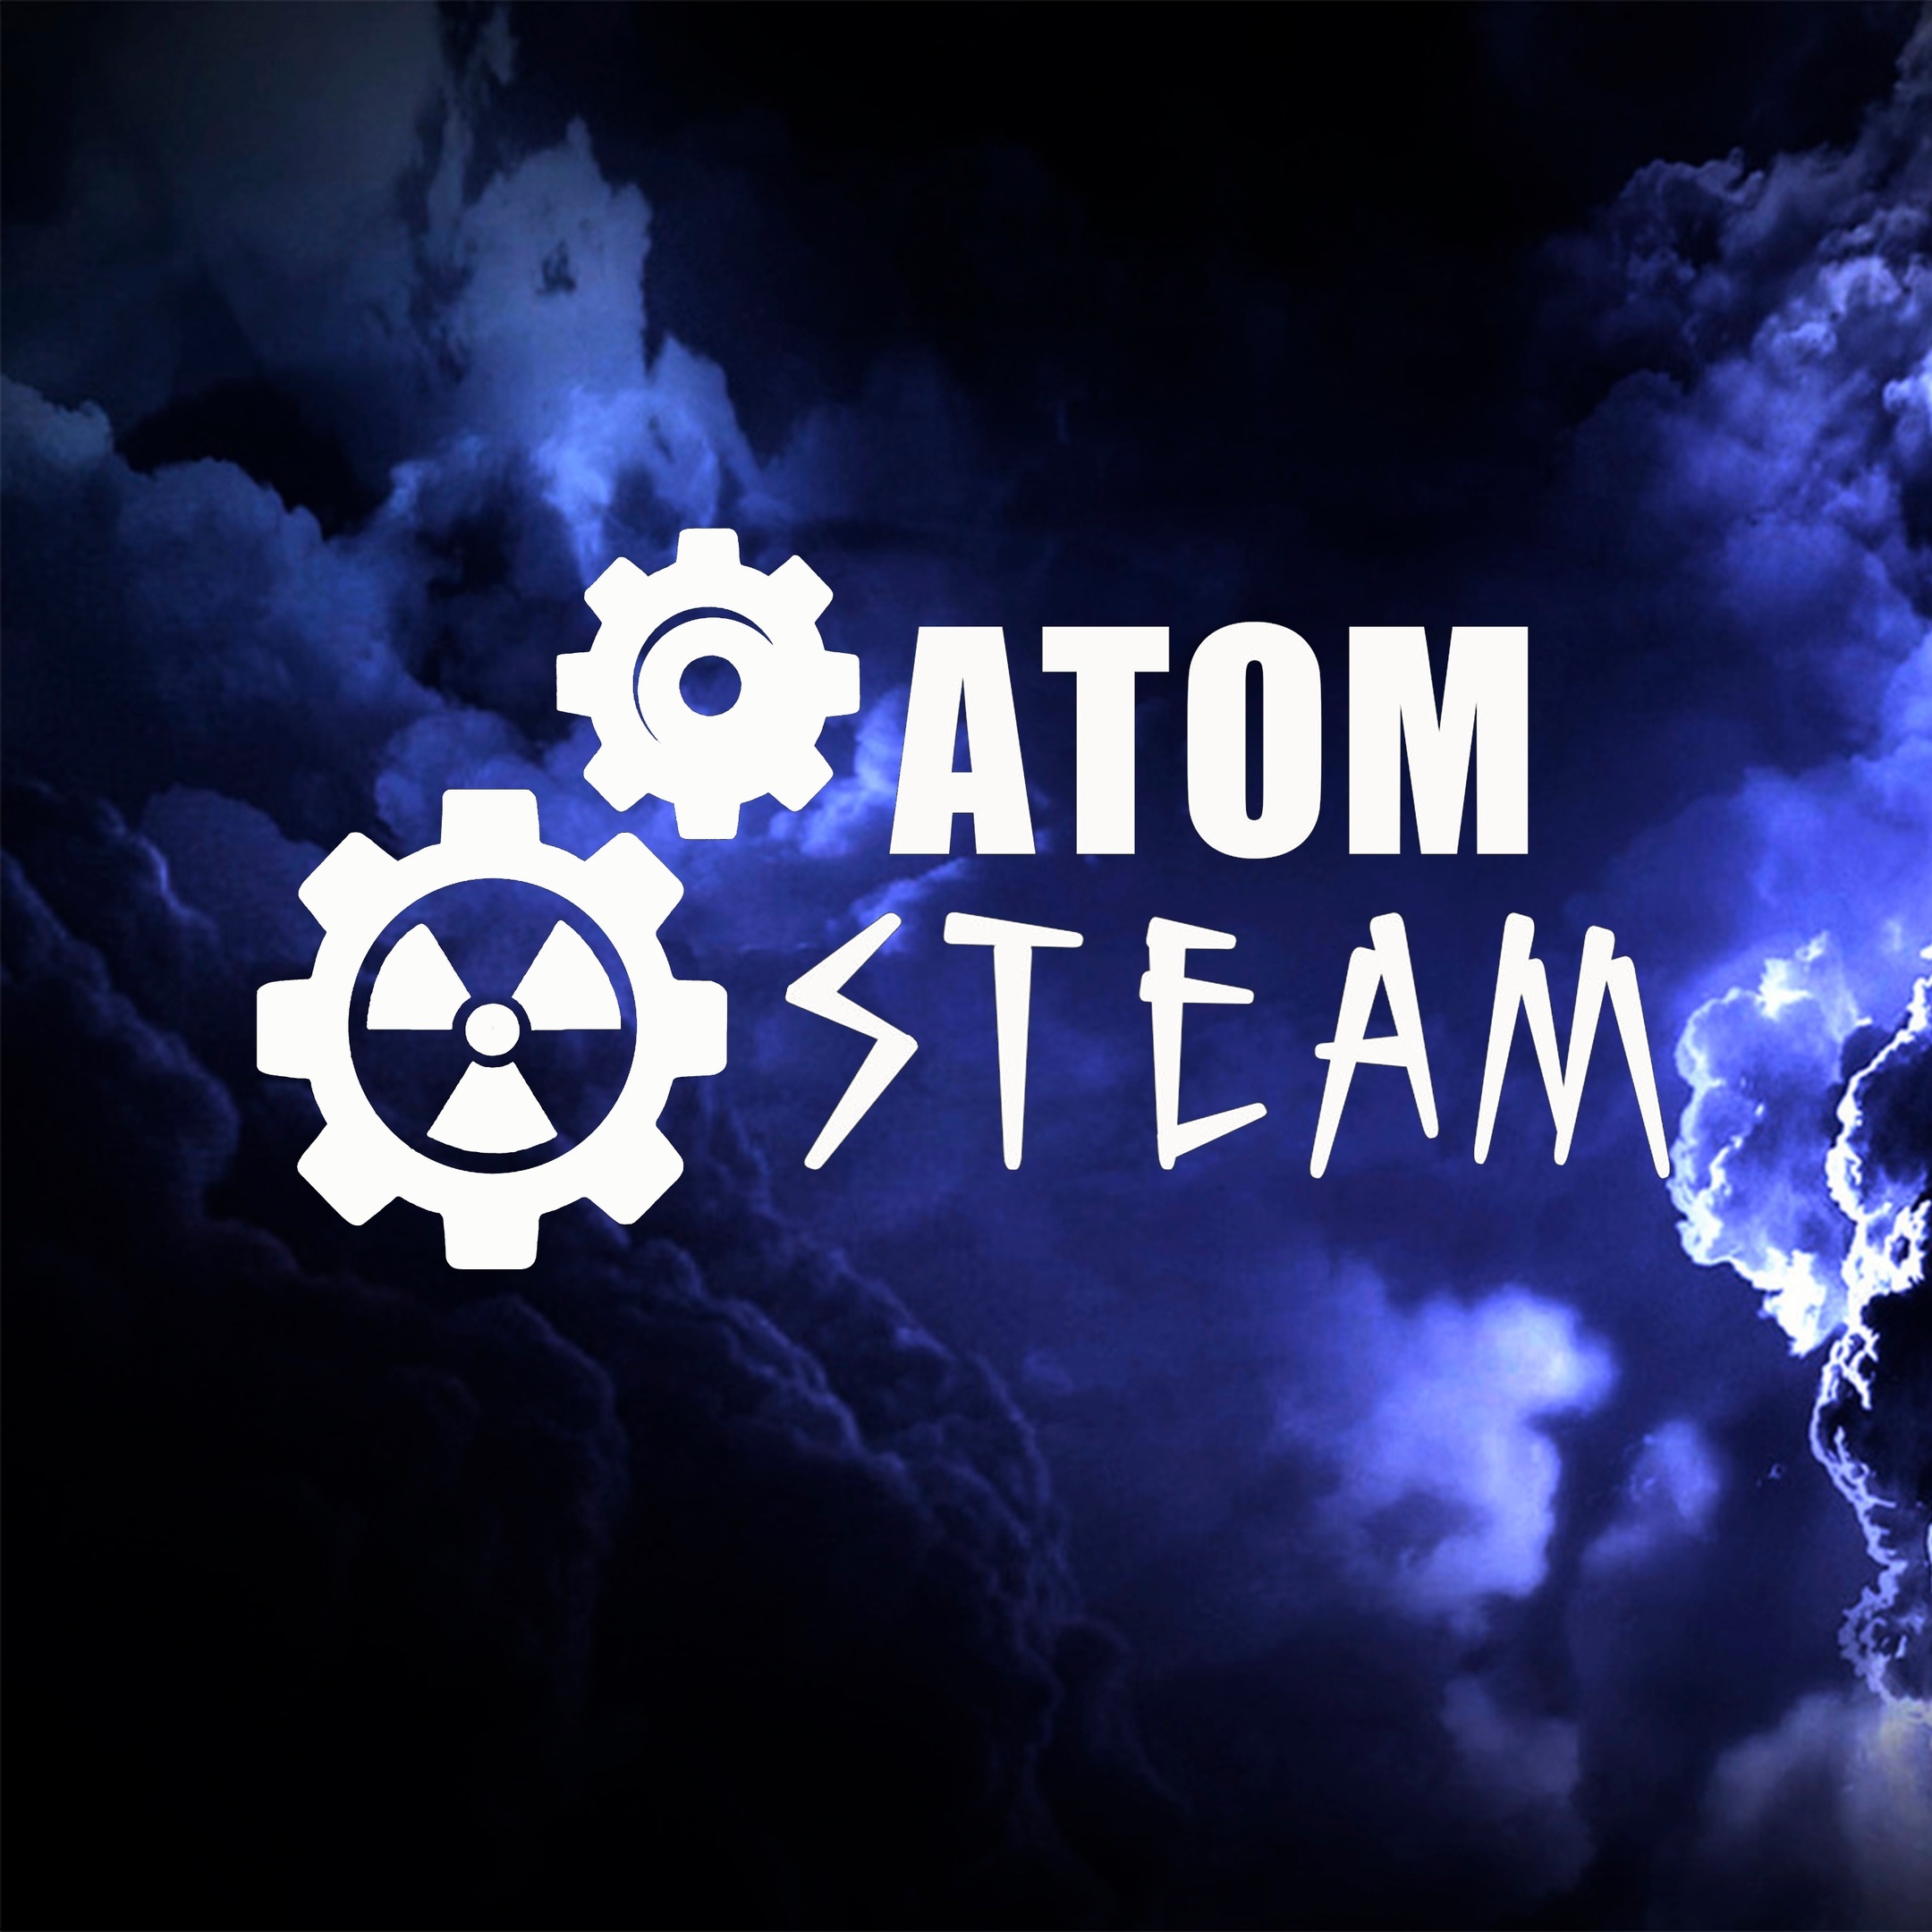 Atom steam музыка фото 3